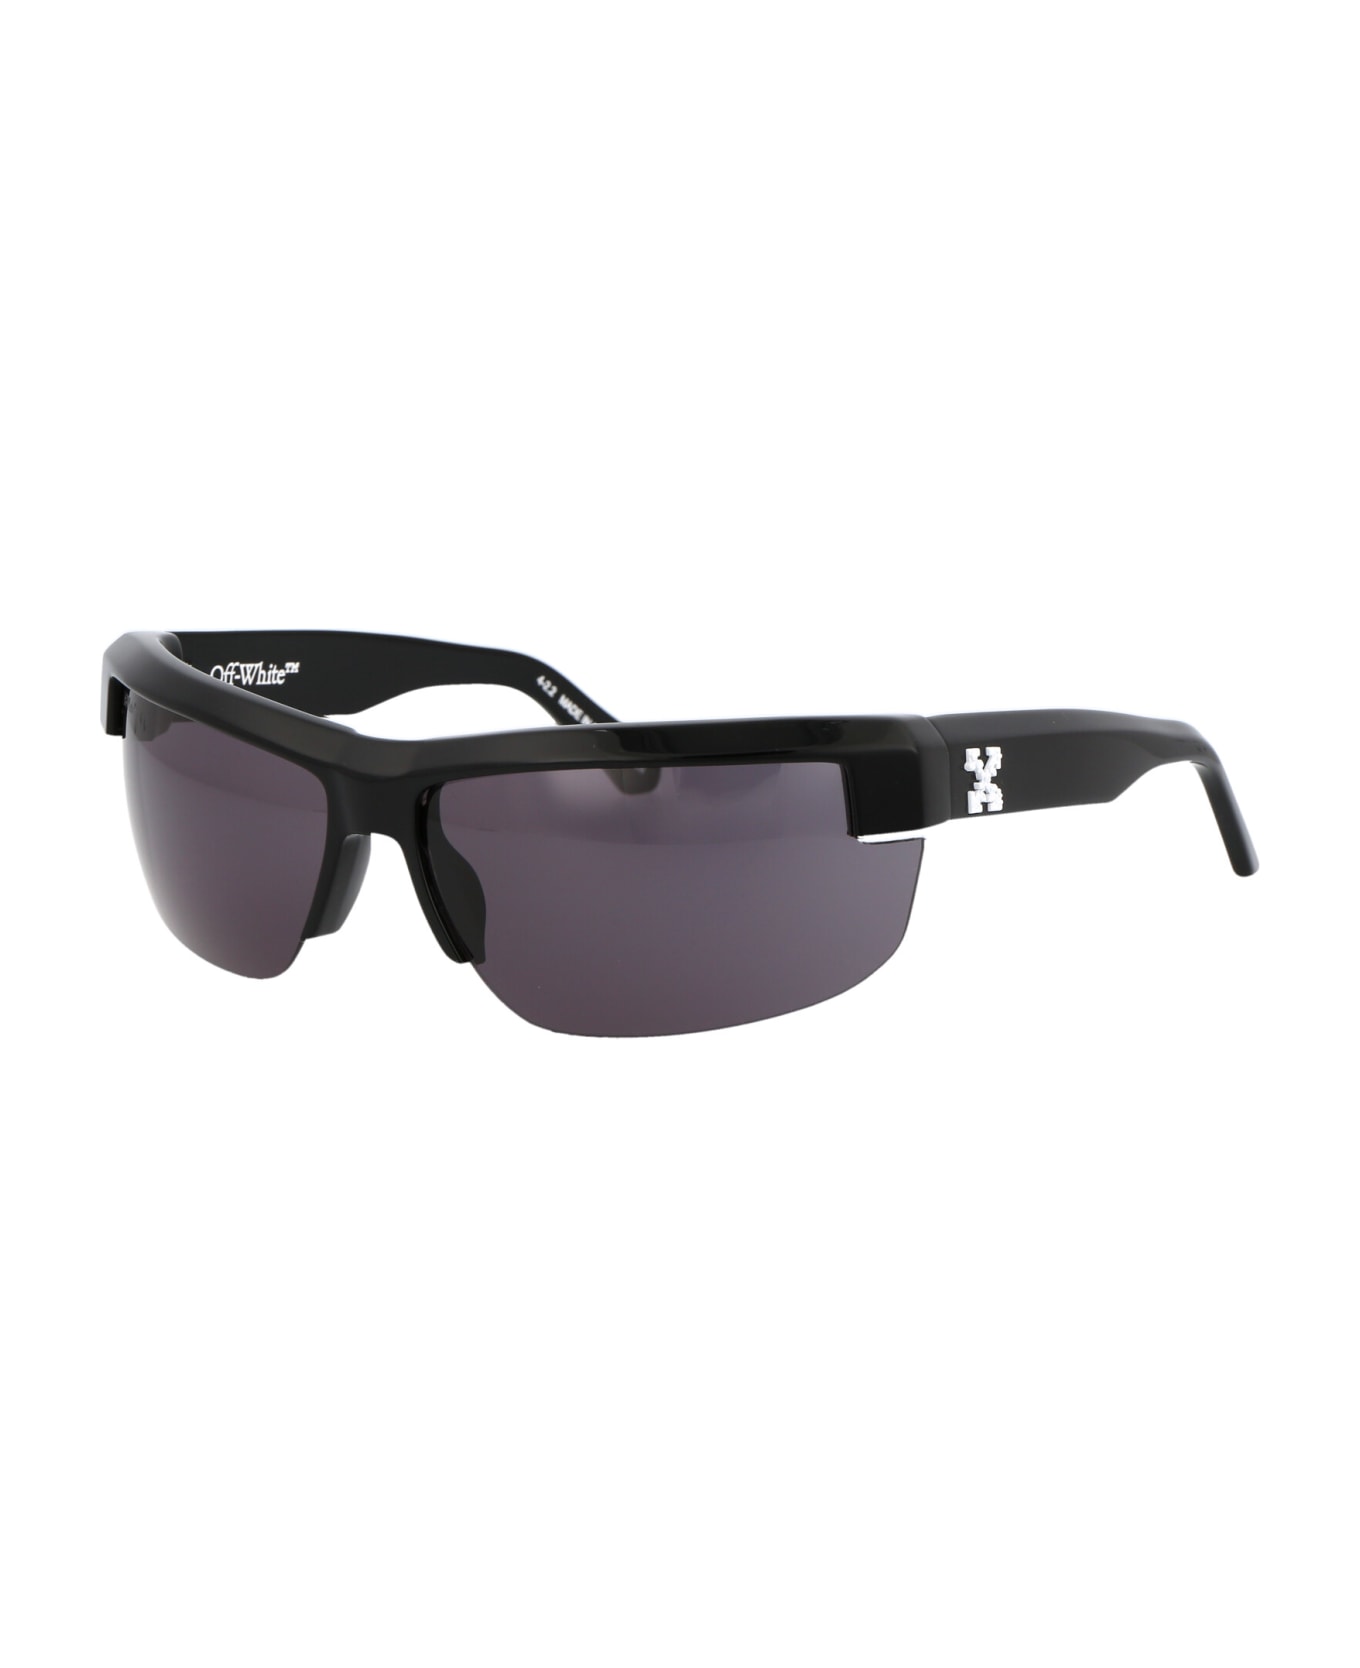 Off-White Toledo Sunglasses - 1007 BLACK DARK GREY